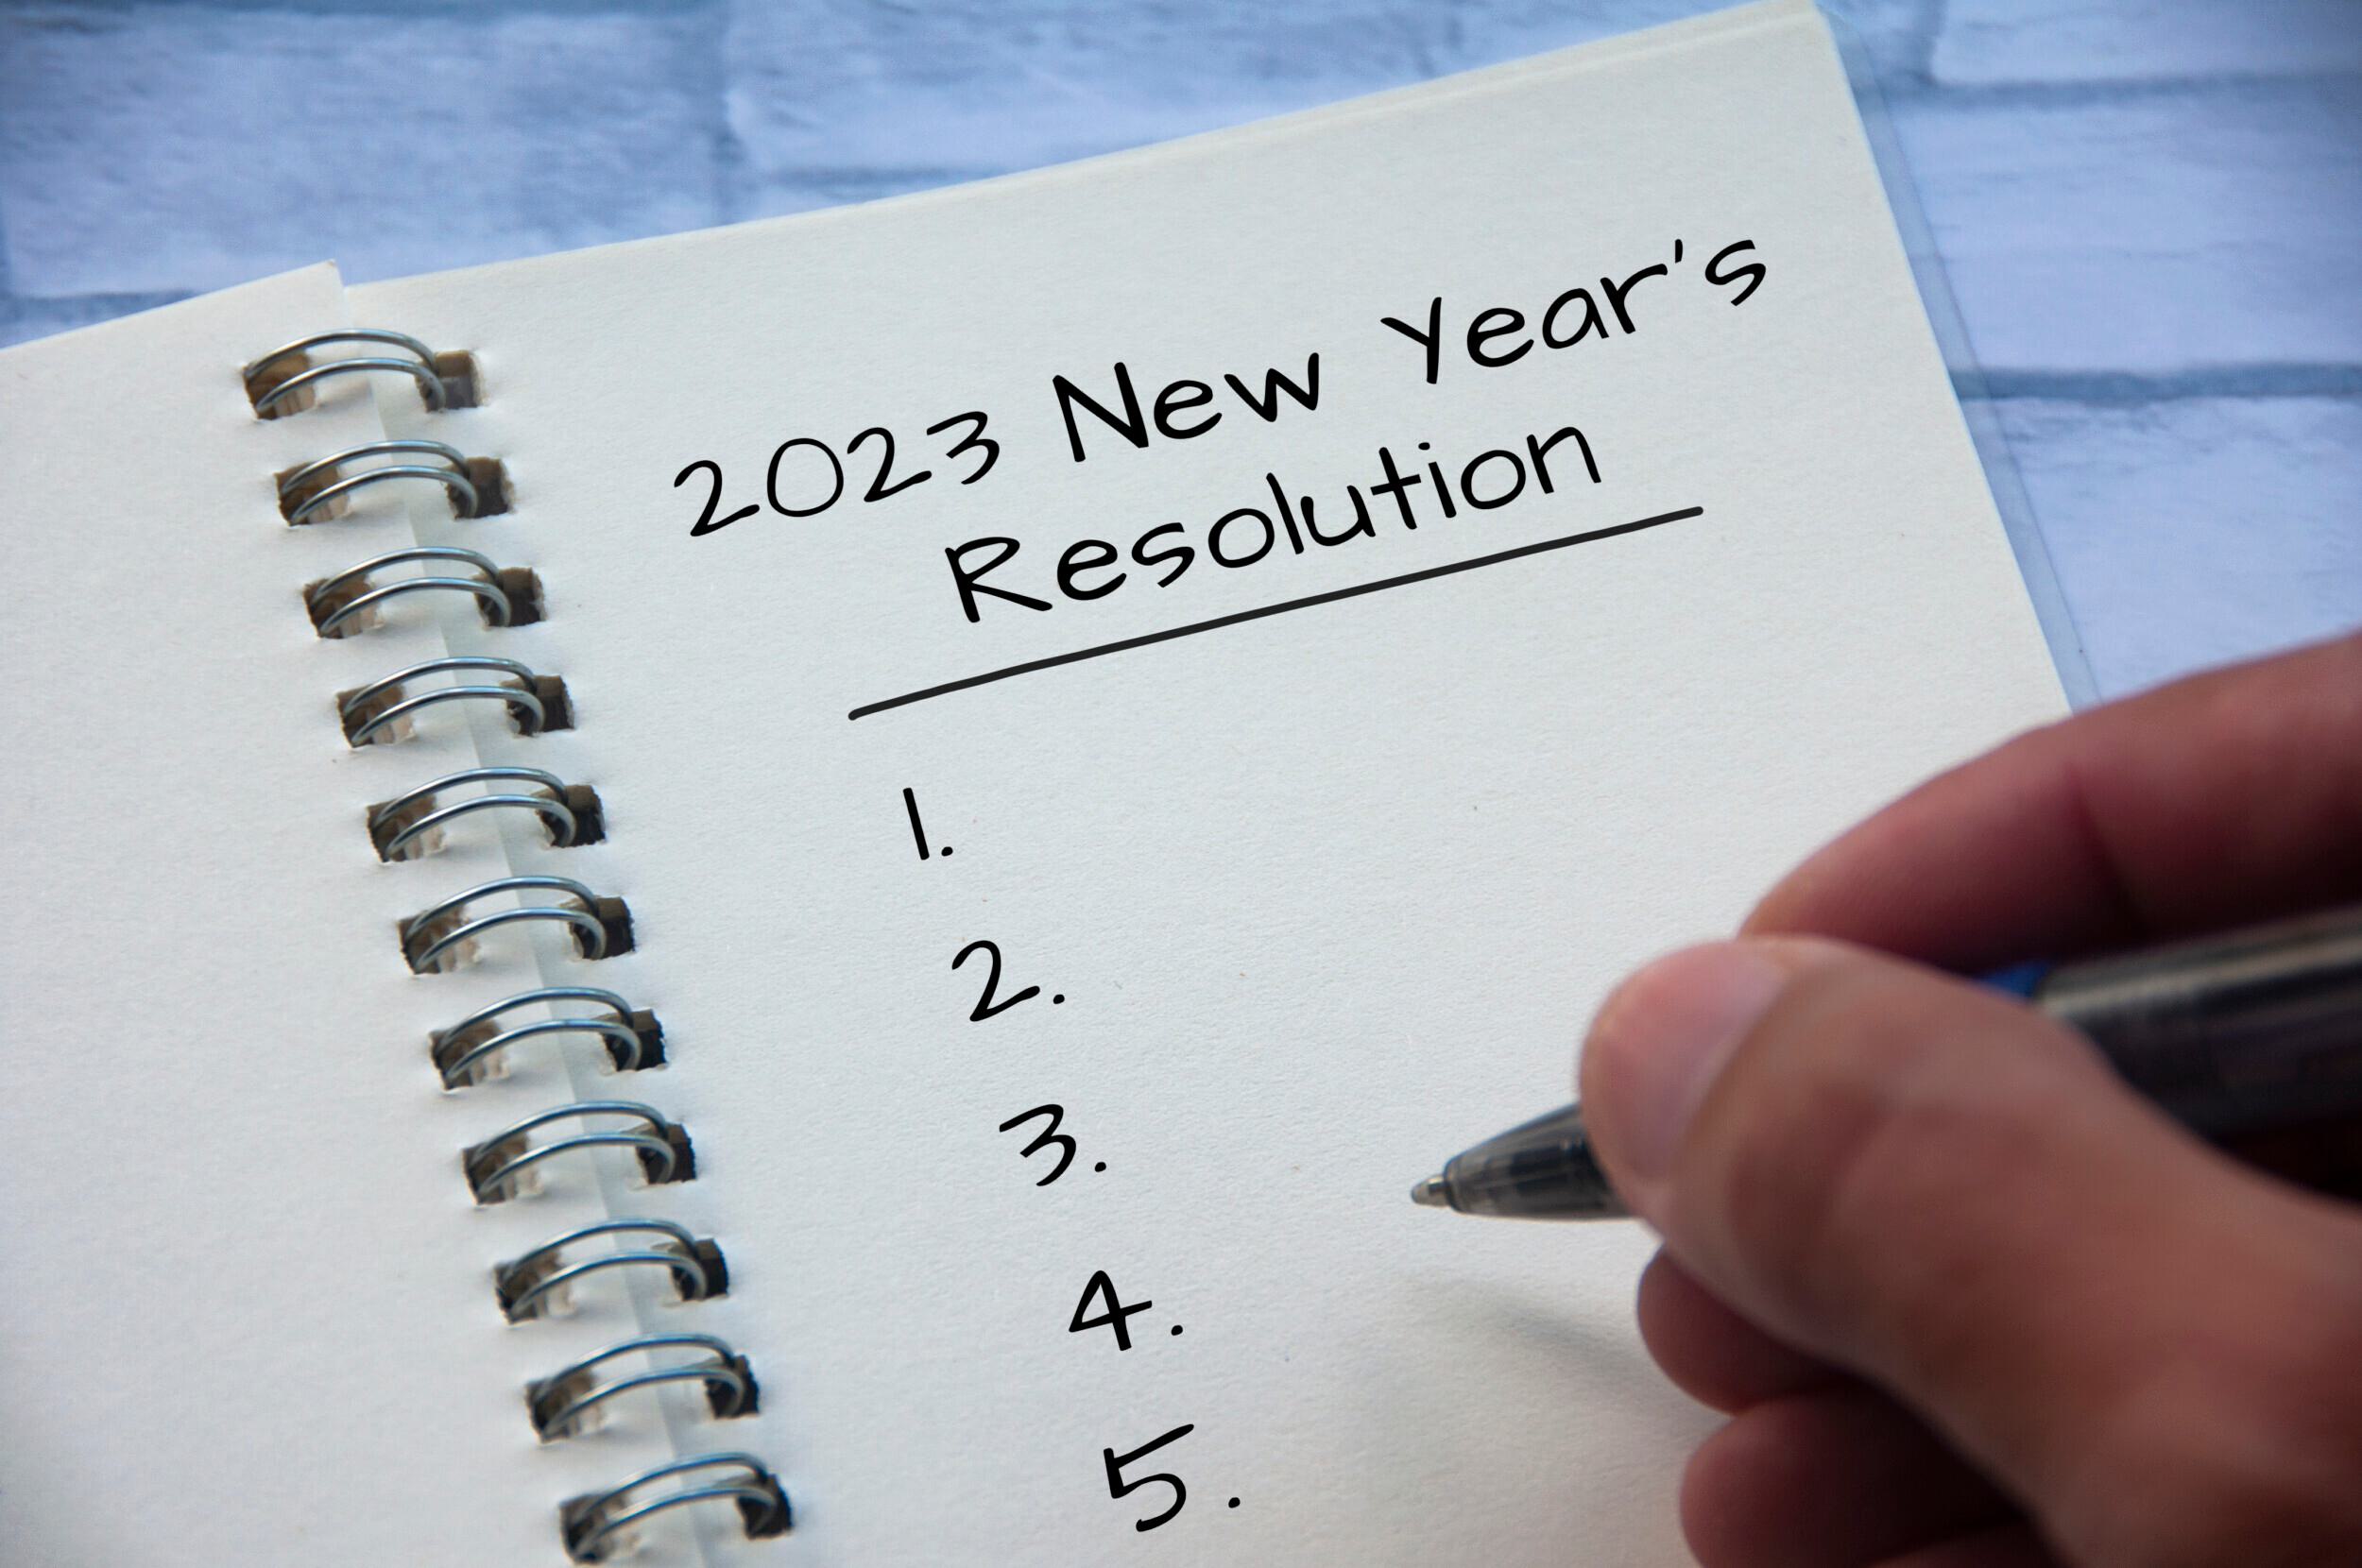 2023 new year's resolution list